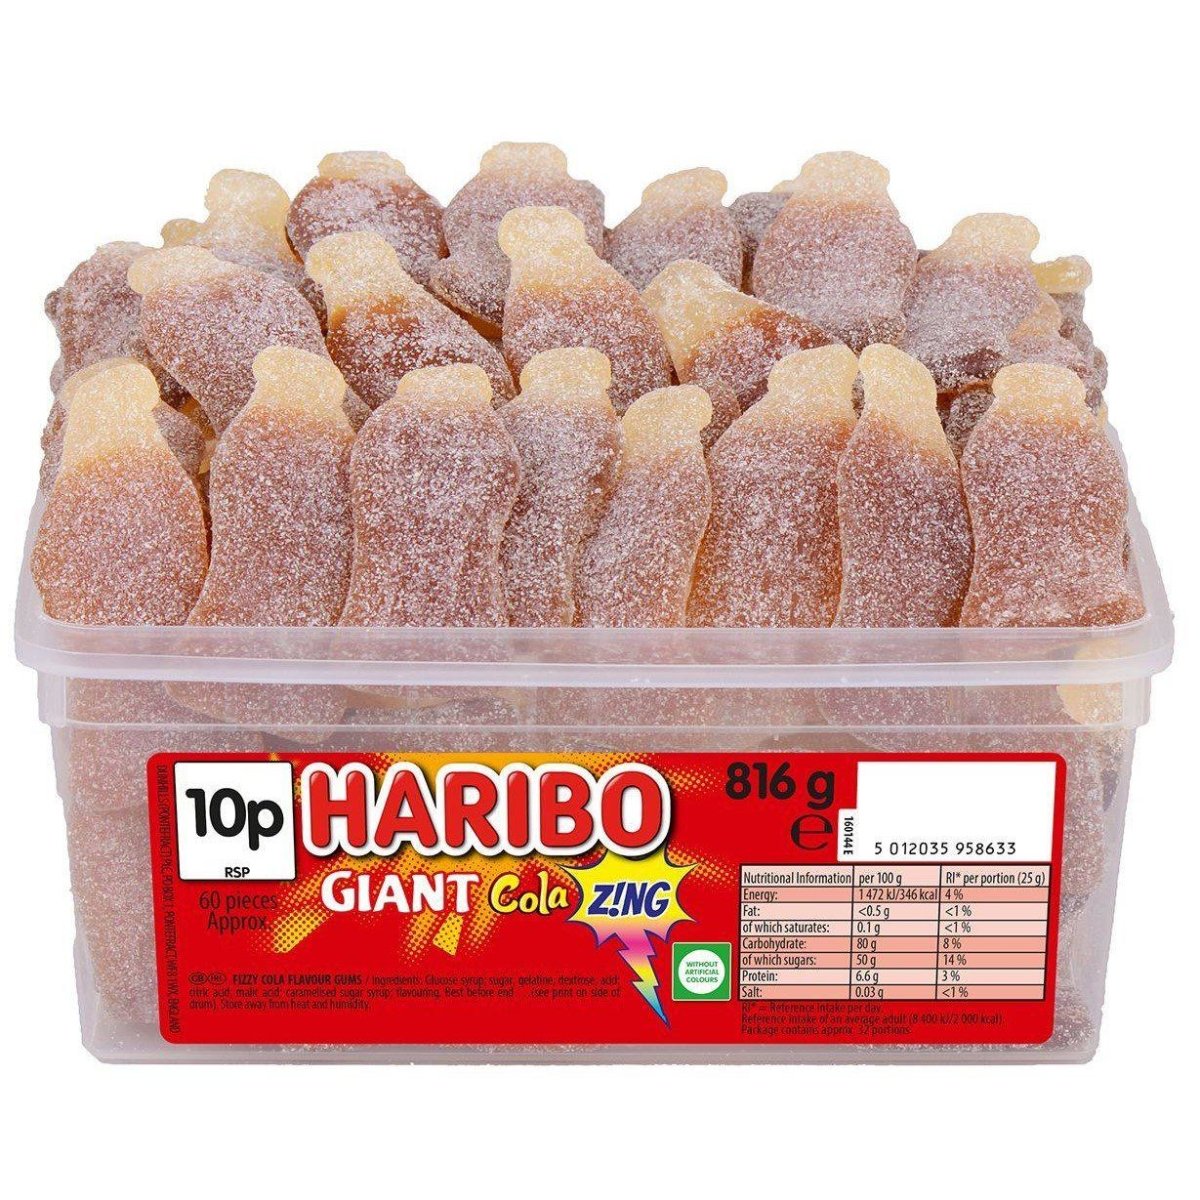 Haribo Giant Cola Zing Tub 816g - Candy Mail UK